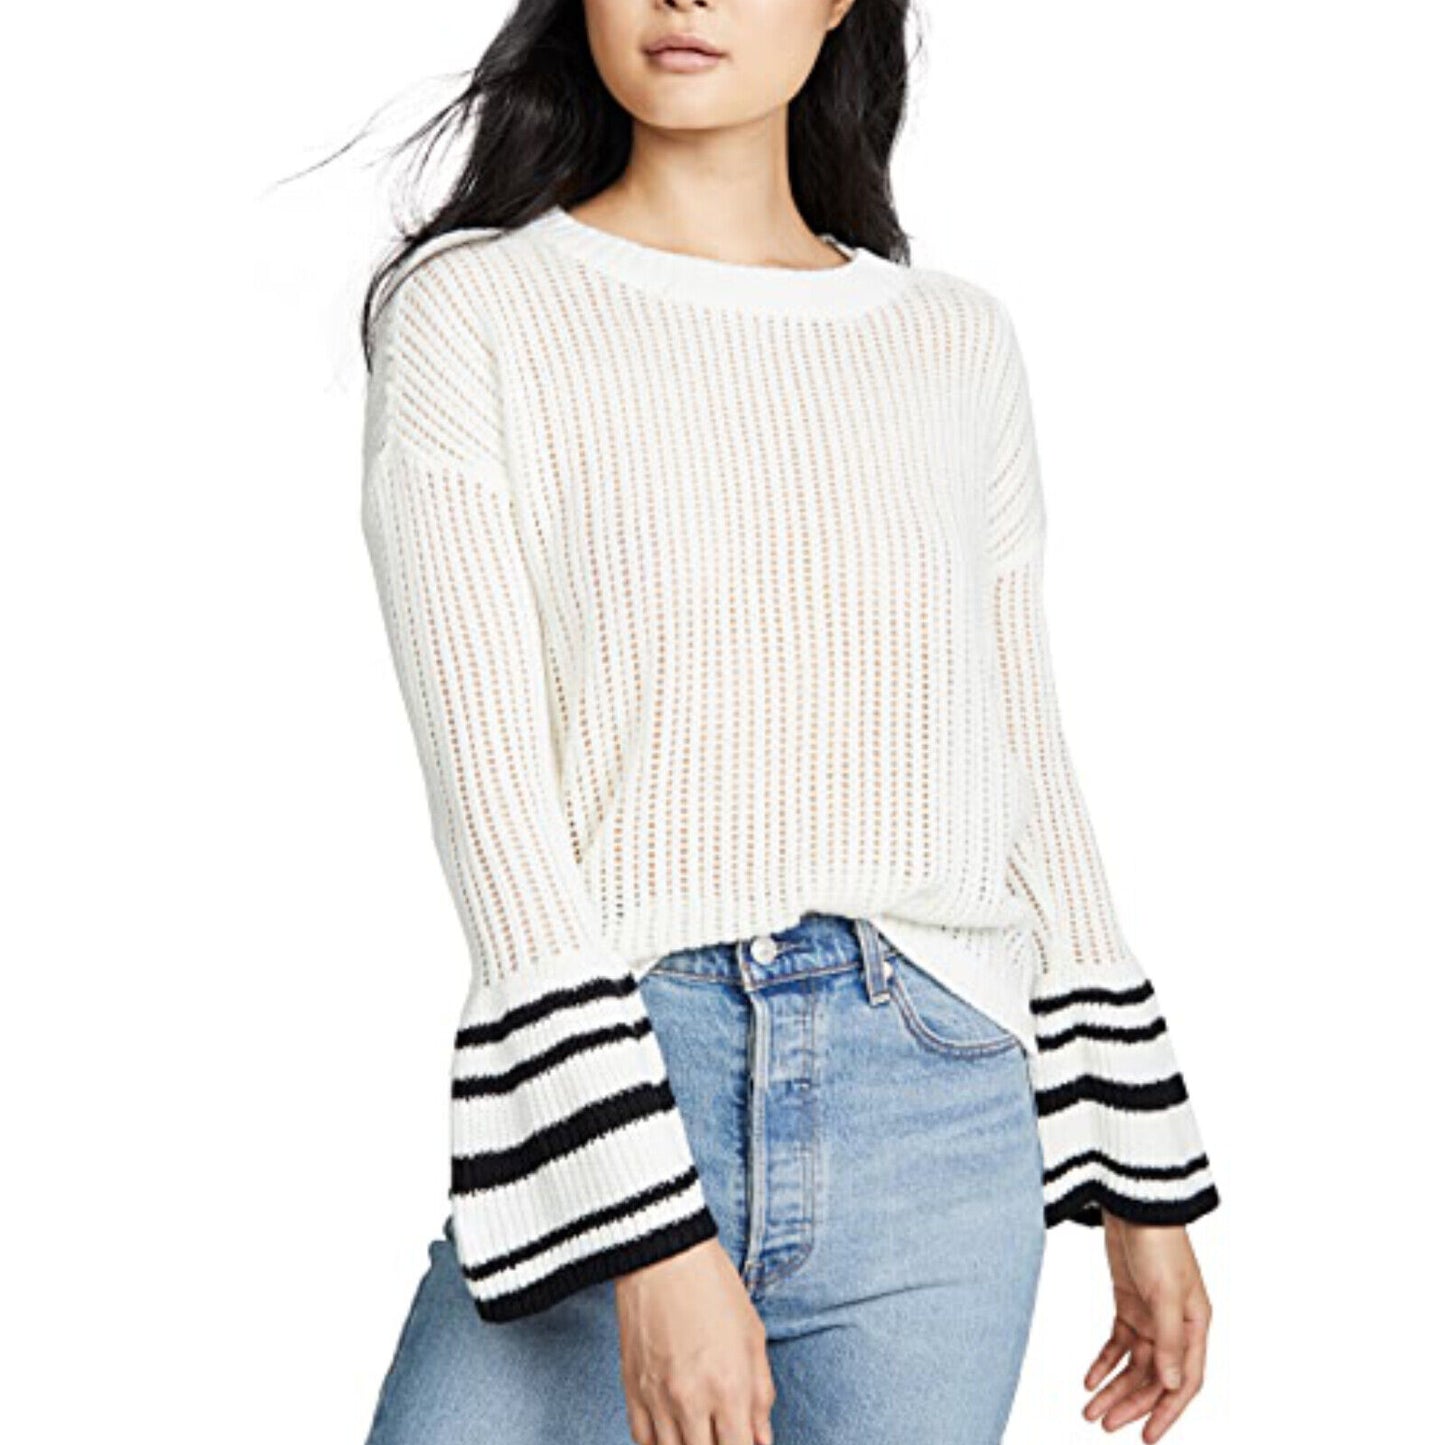 NWT Jack By BB Dakota Flare Sleeves Stripe Top Sweater. Size: S,M